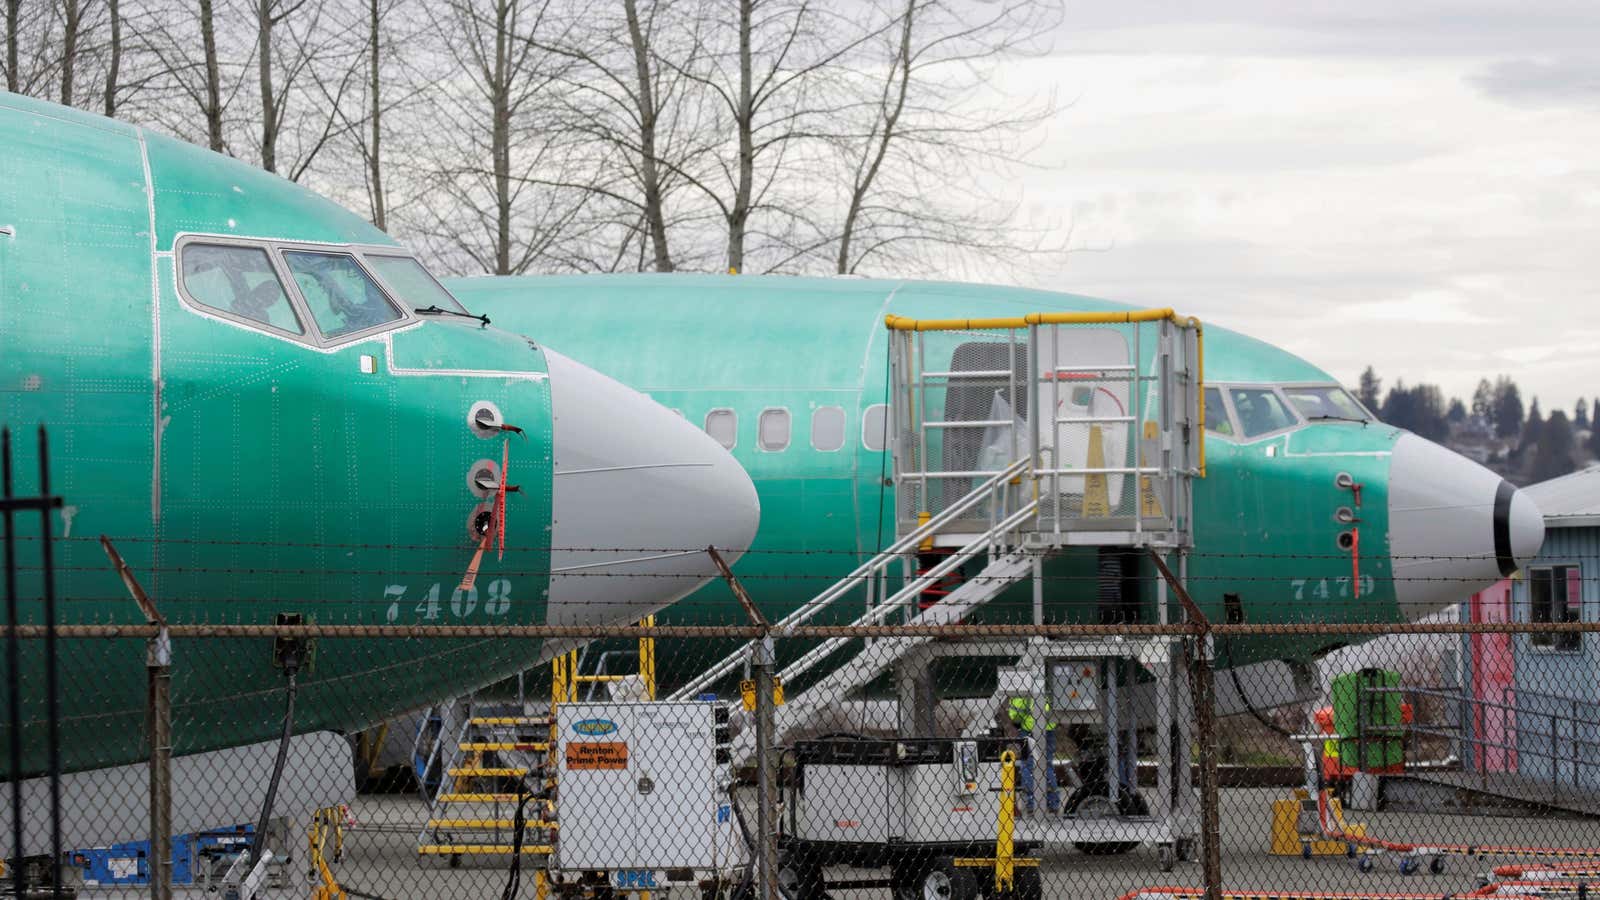 737 MAX 8 aircraft parked at a Boeing production facility in Renton, Washington.